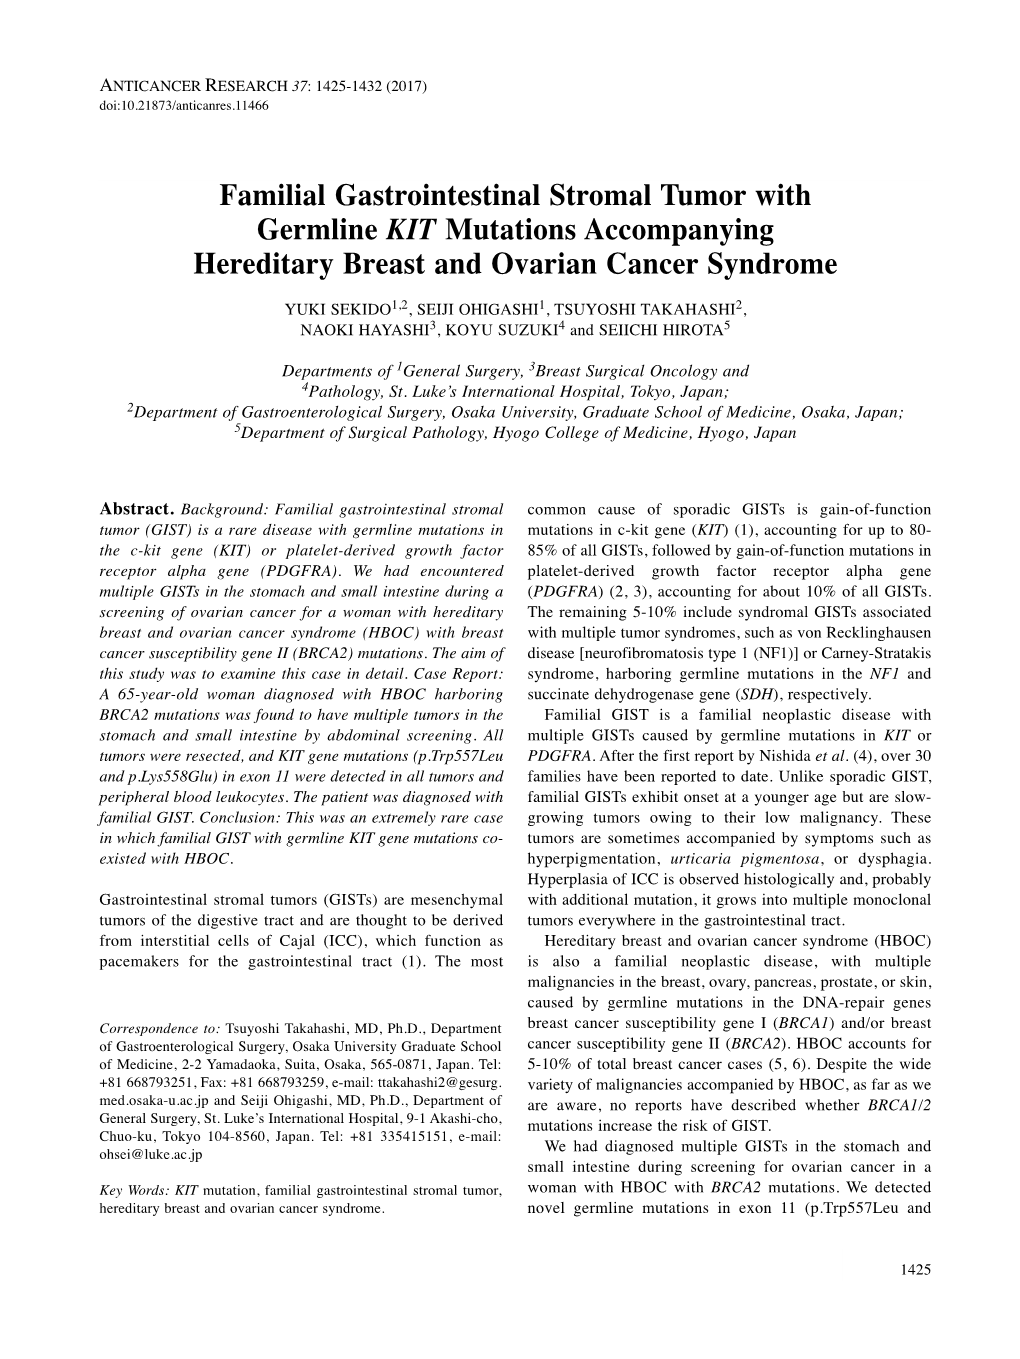 Familial Gastrointestinal Stromal Tumor with Germline KIT Mutations